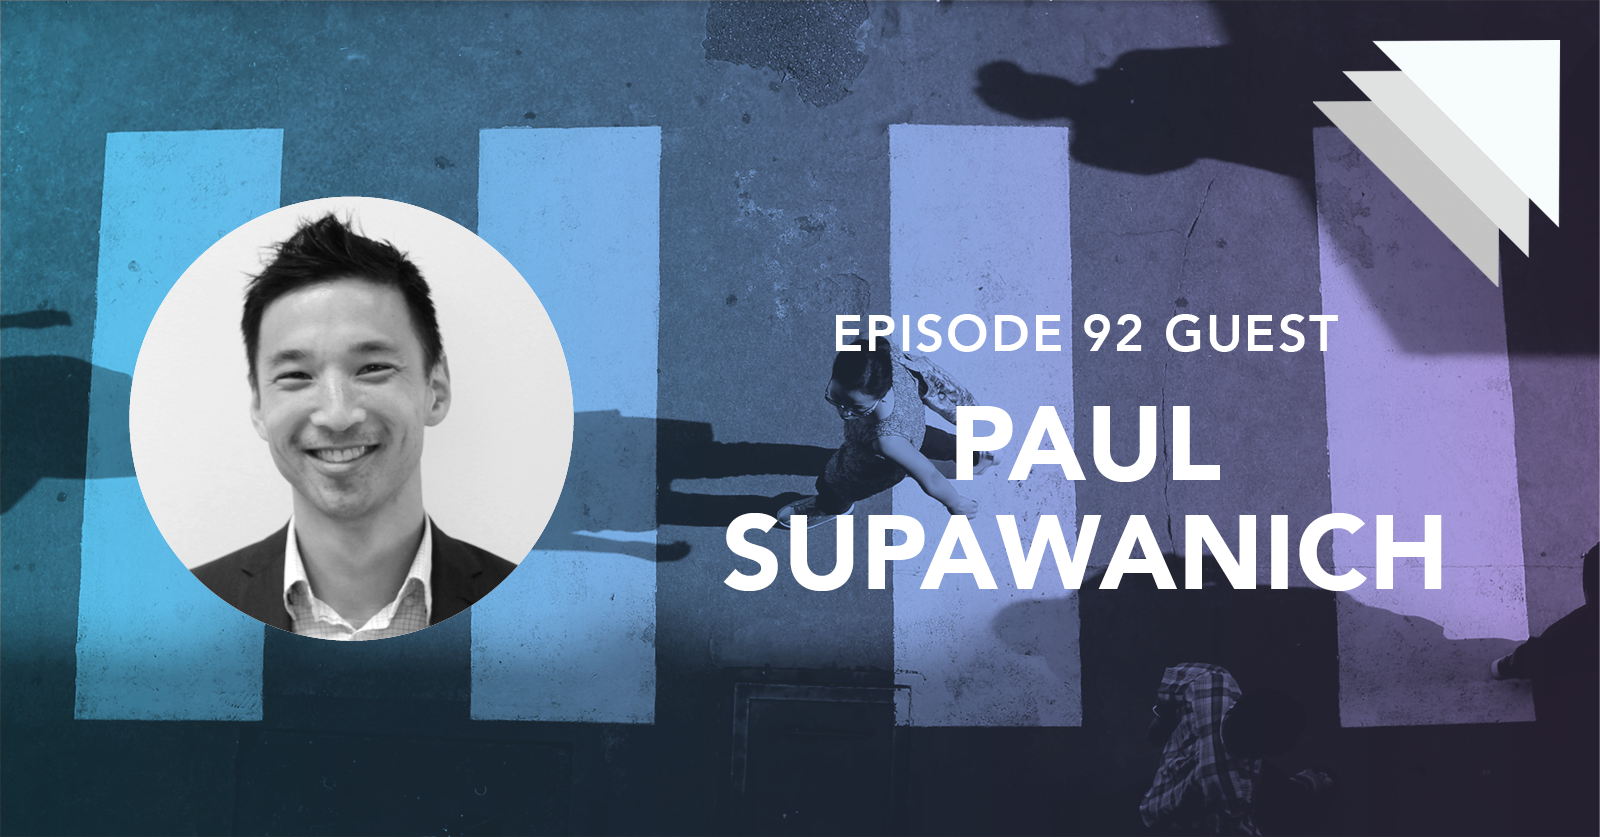 Episode 92 guest Paul Supawanich